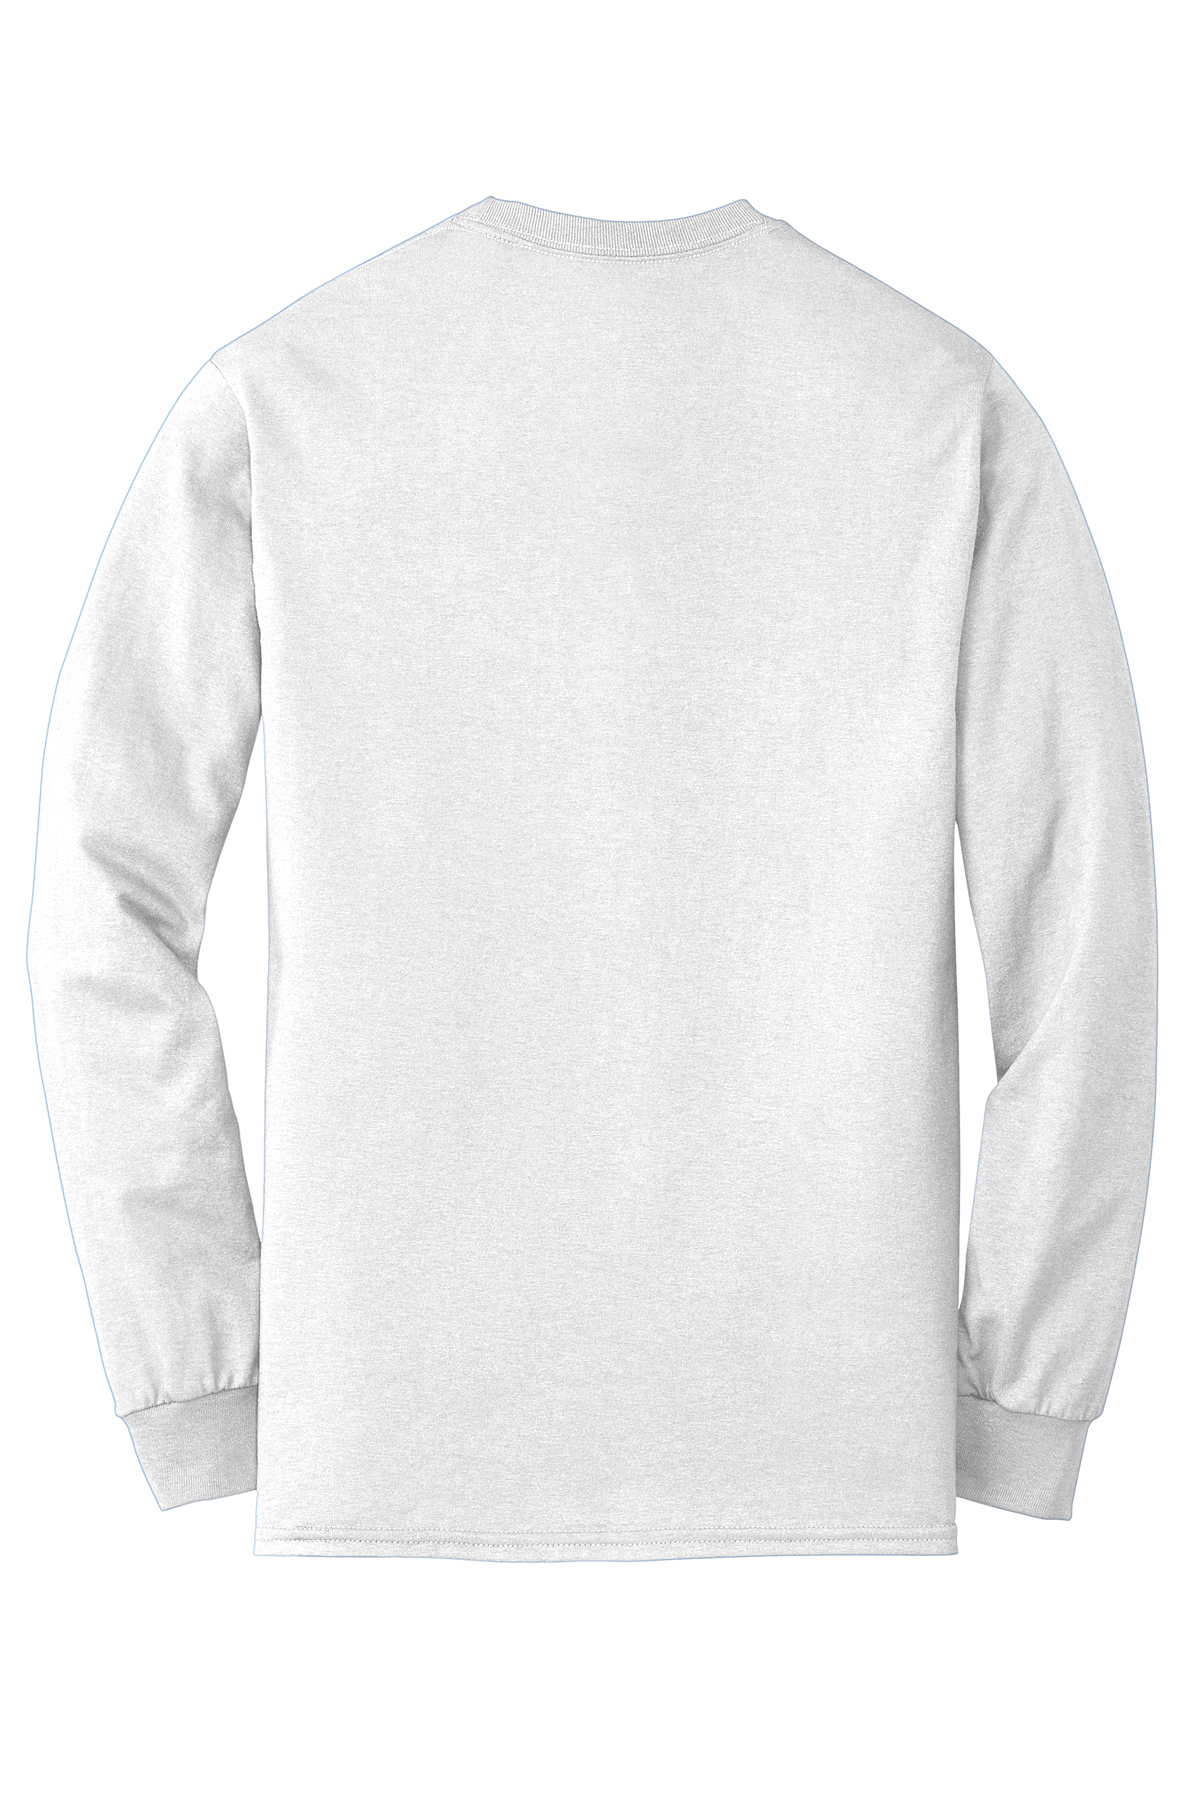 Gildan - DryBlend 50 Cotton/50 Poly Long Sleeve T-Shirt | Product ...